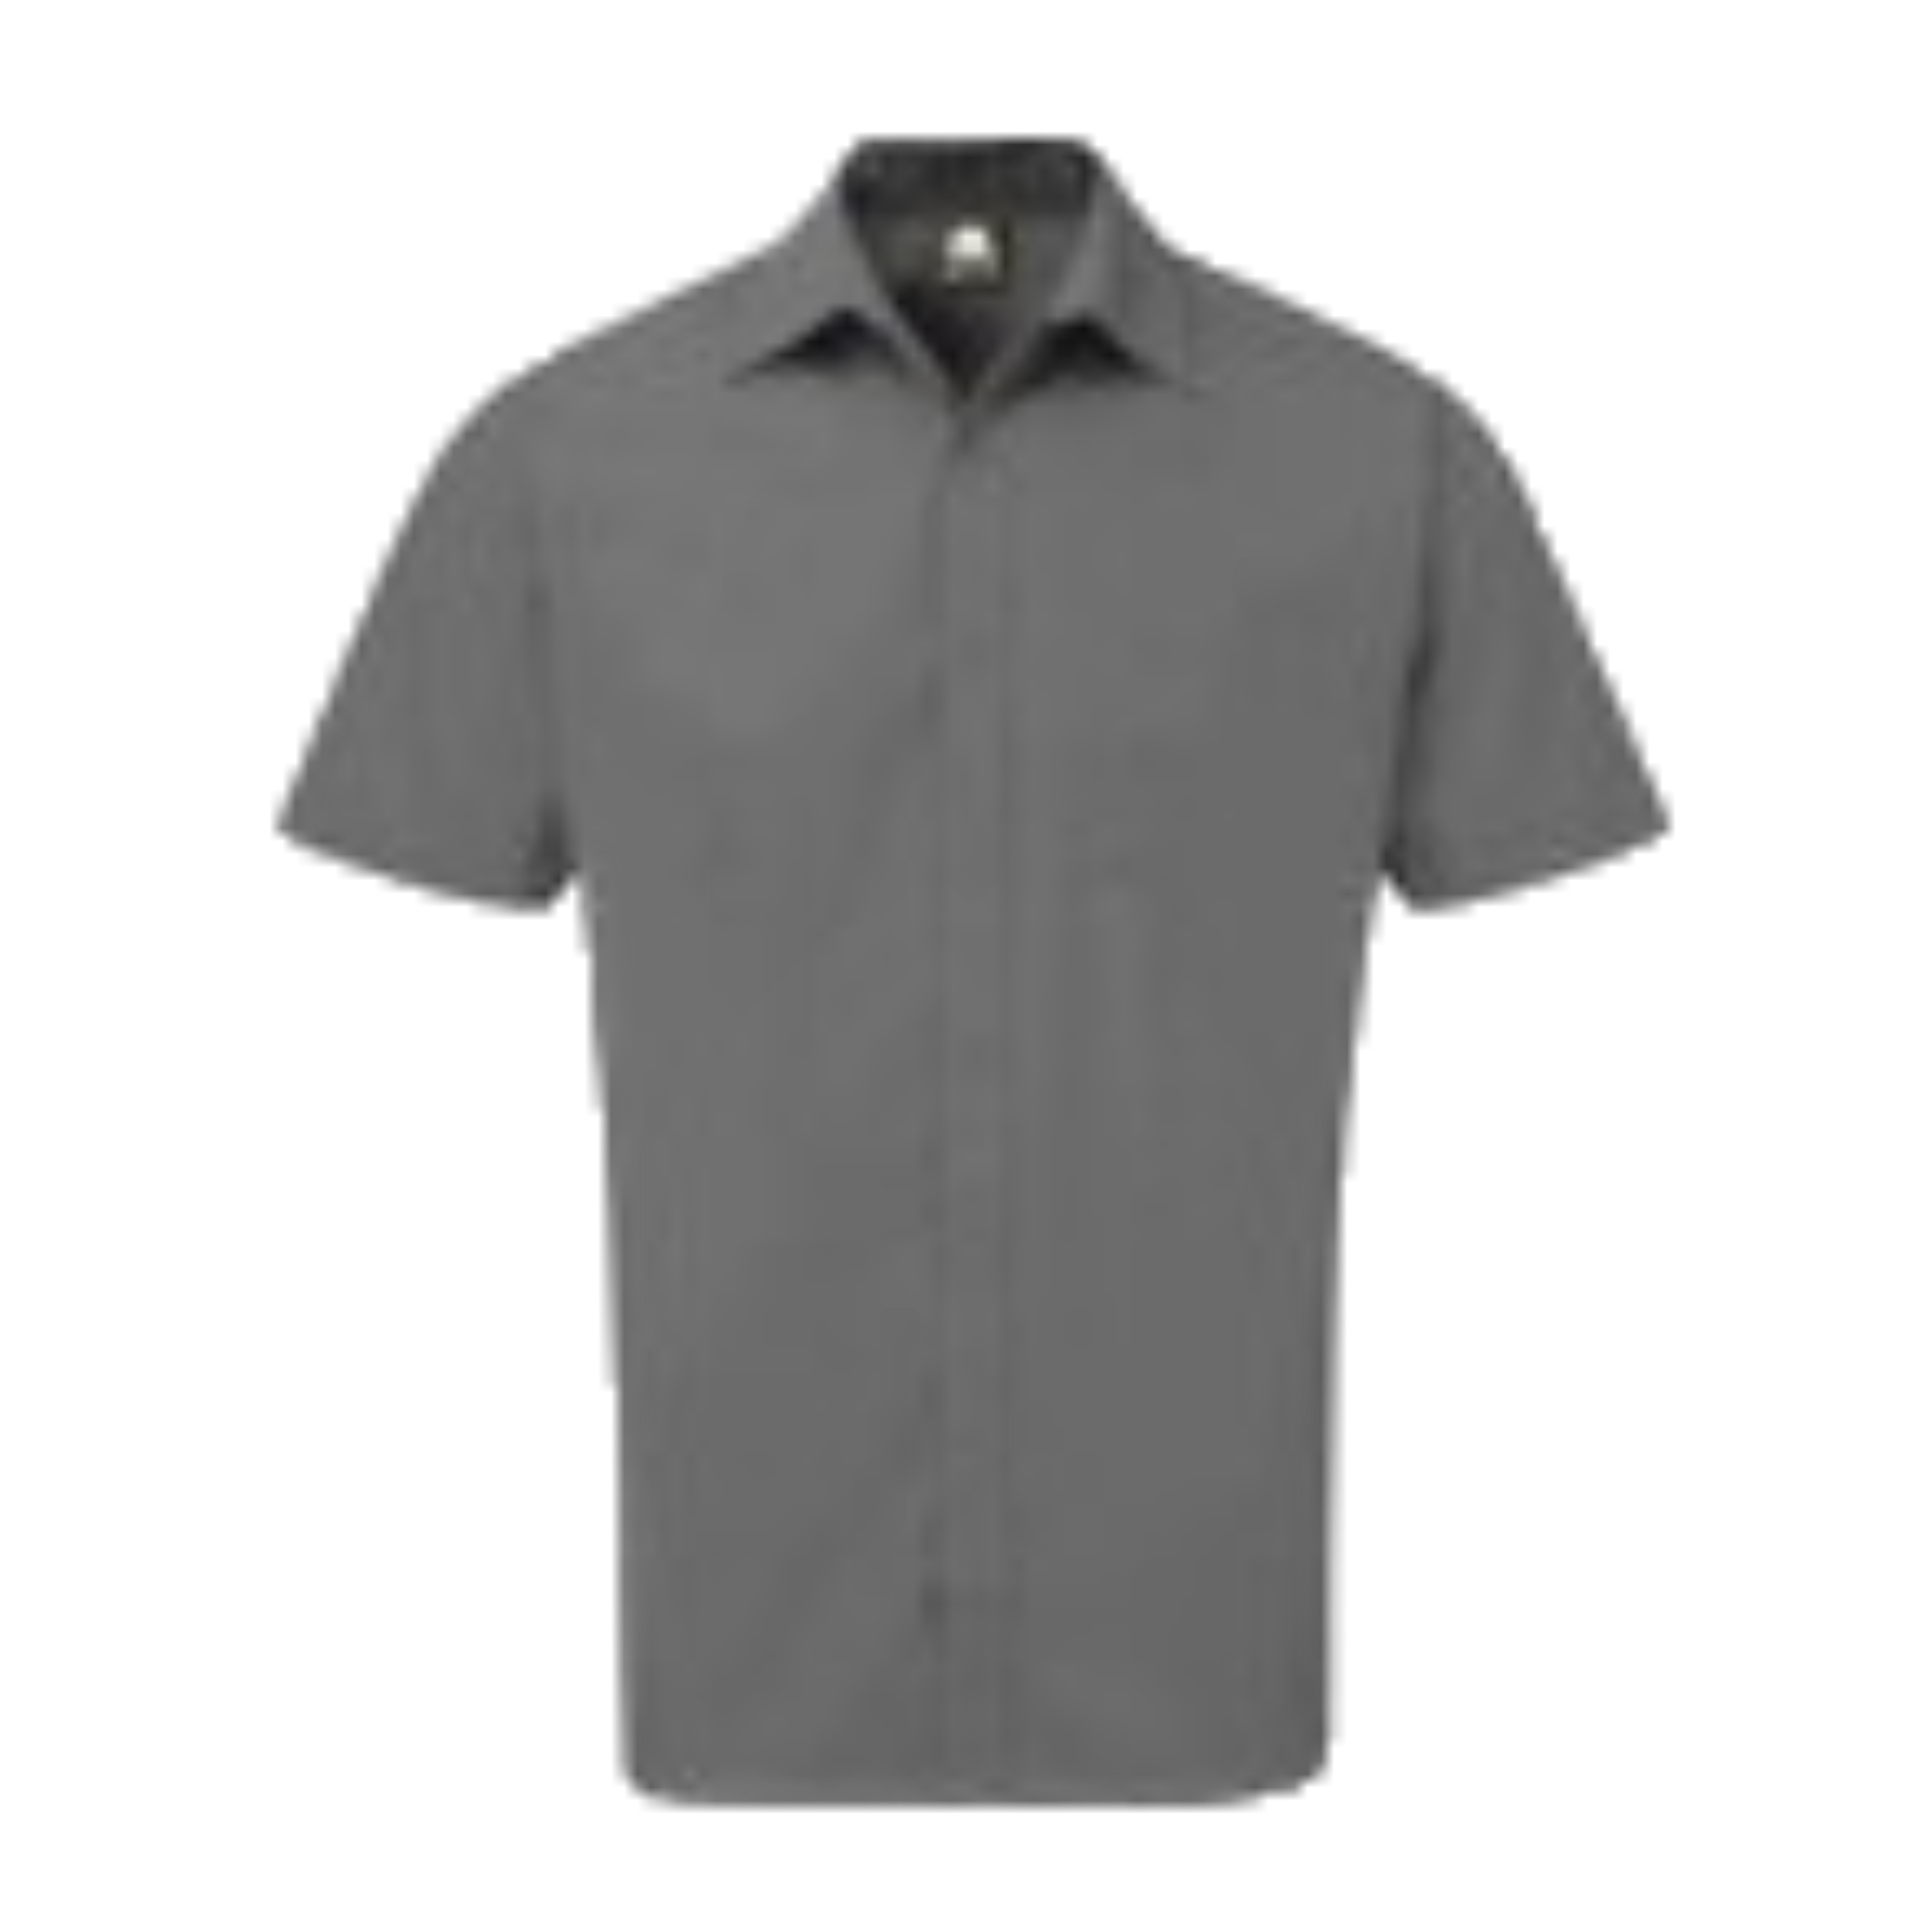 Orn Premium Oxford Short Sleeve Shirt - 15in / Dark Grey - TJ Hughes